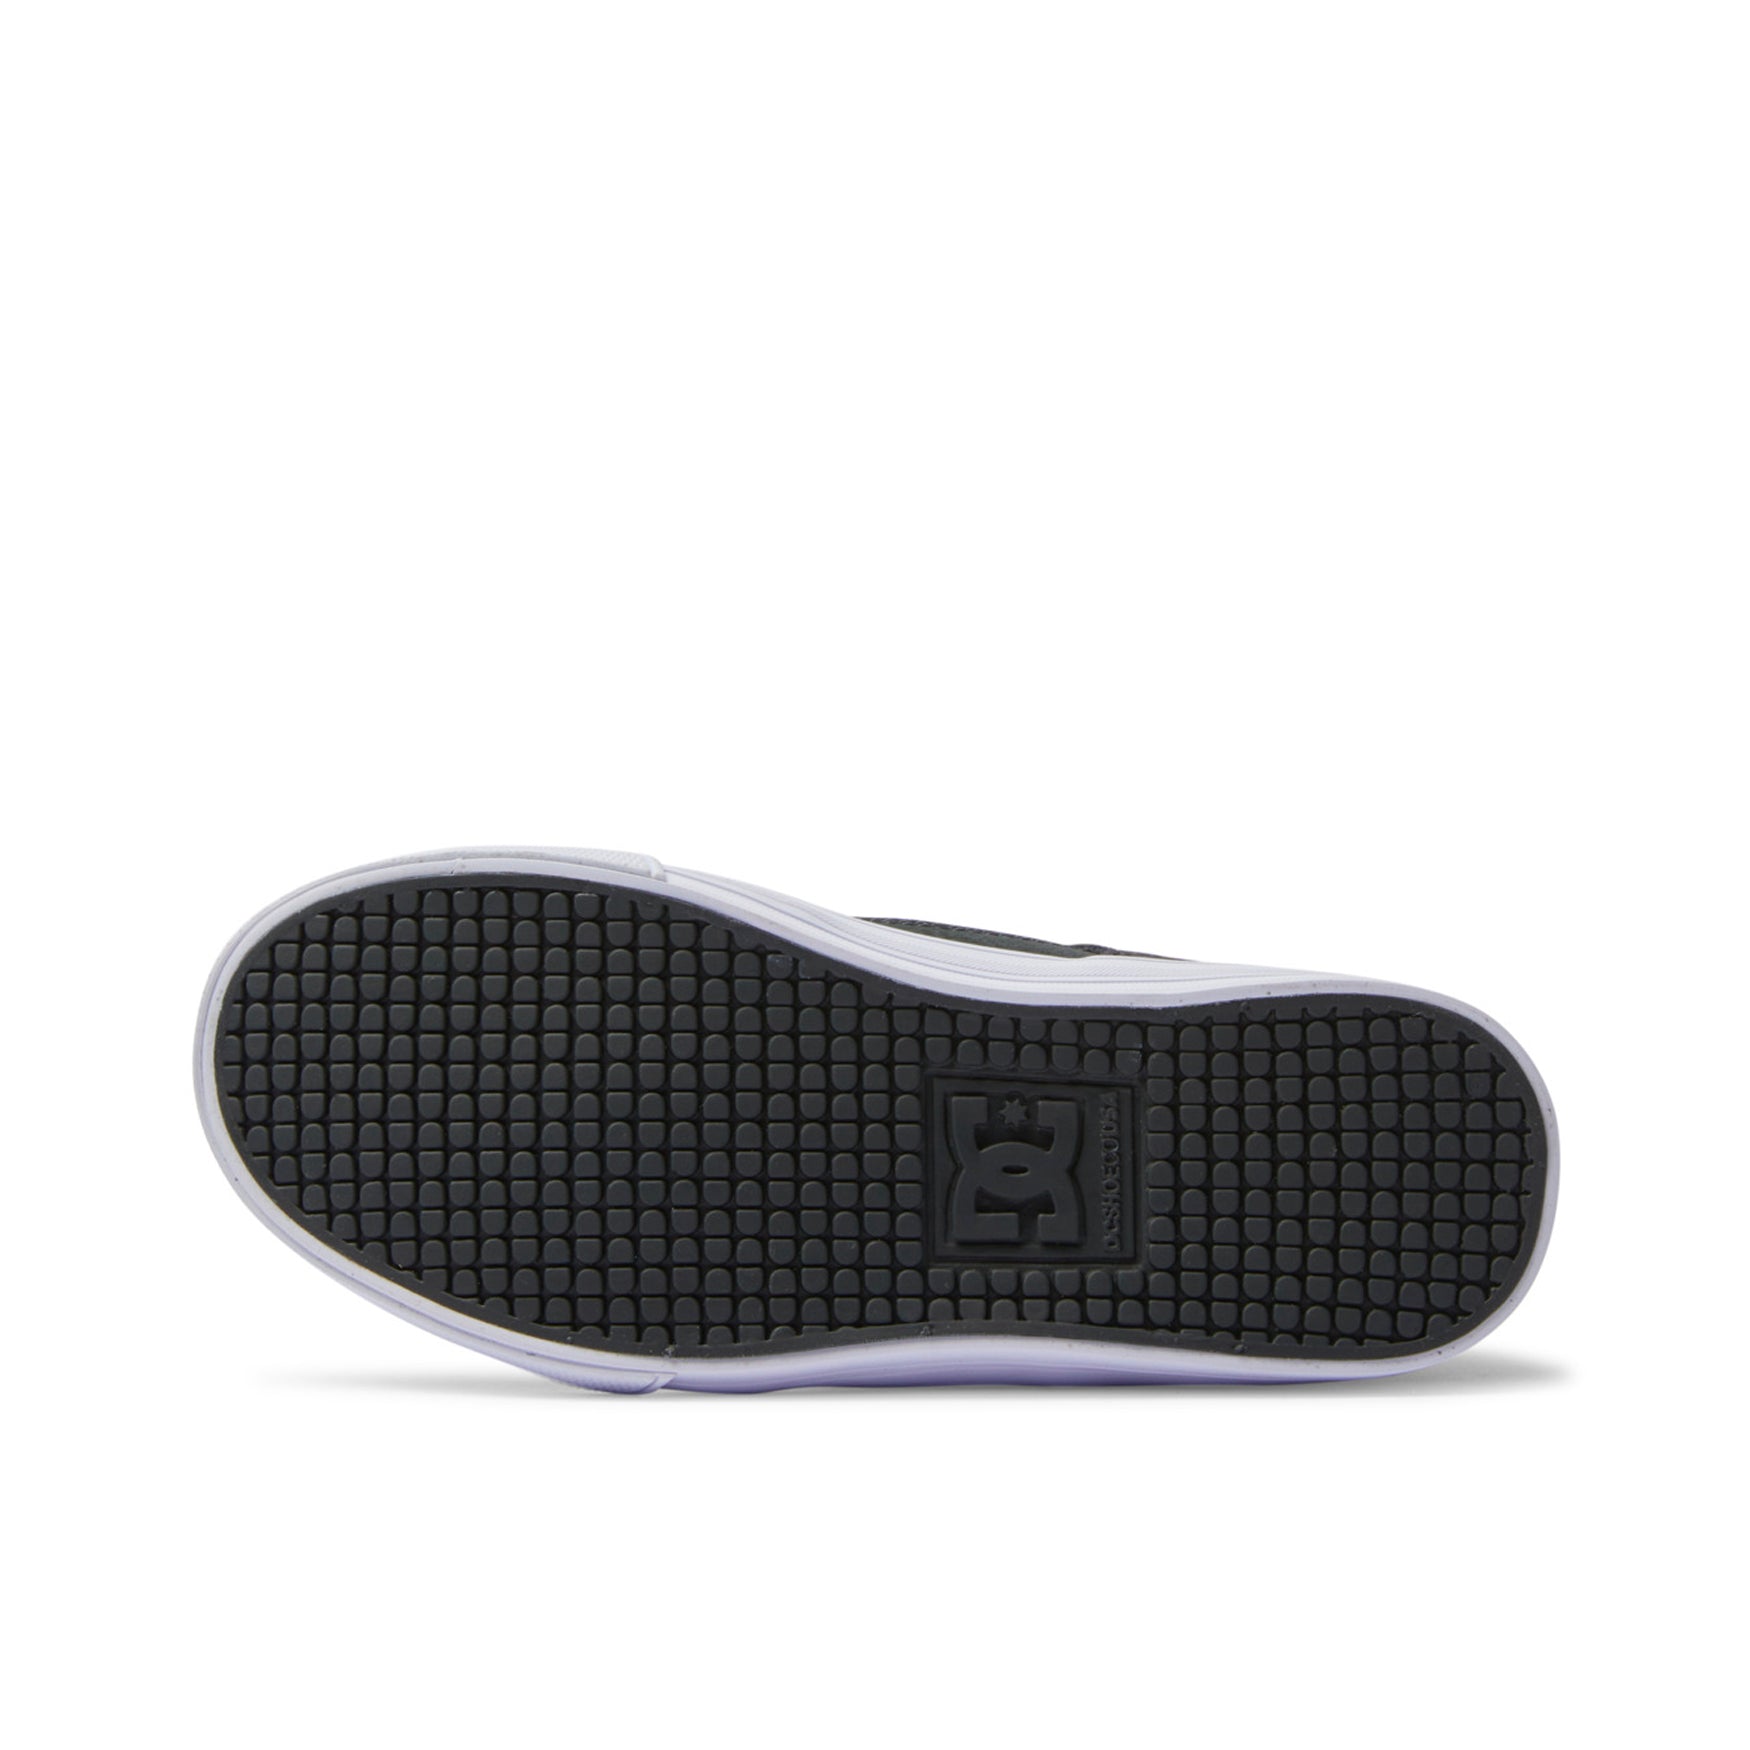 DC Pure Elastic Kids Shoes - Anthracite/ Black - Prime Delux Store